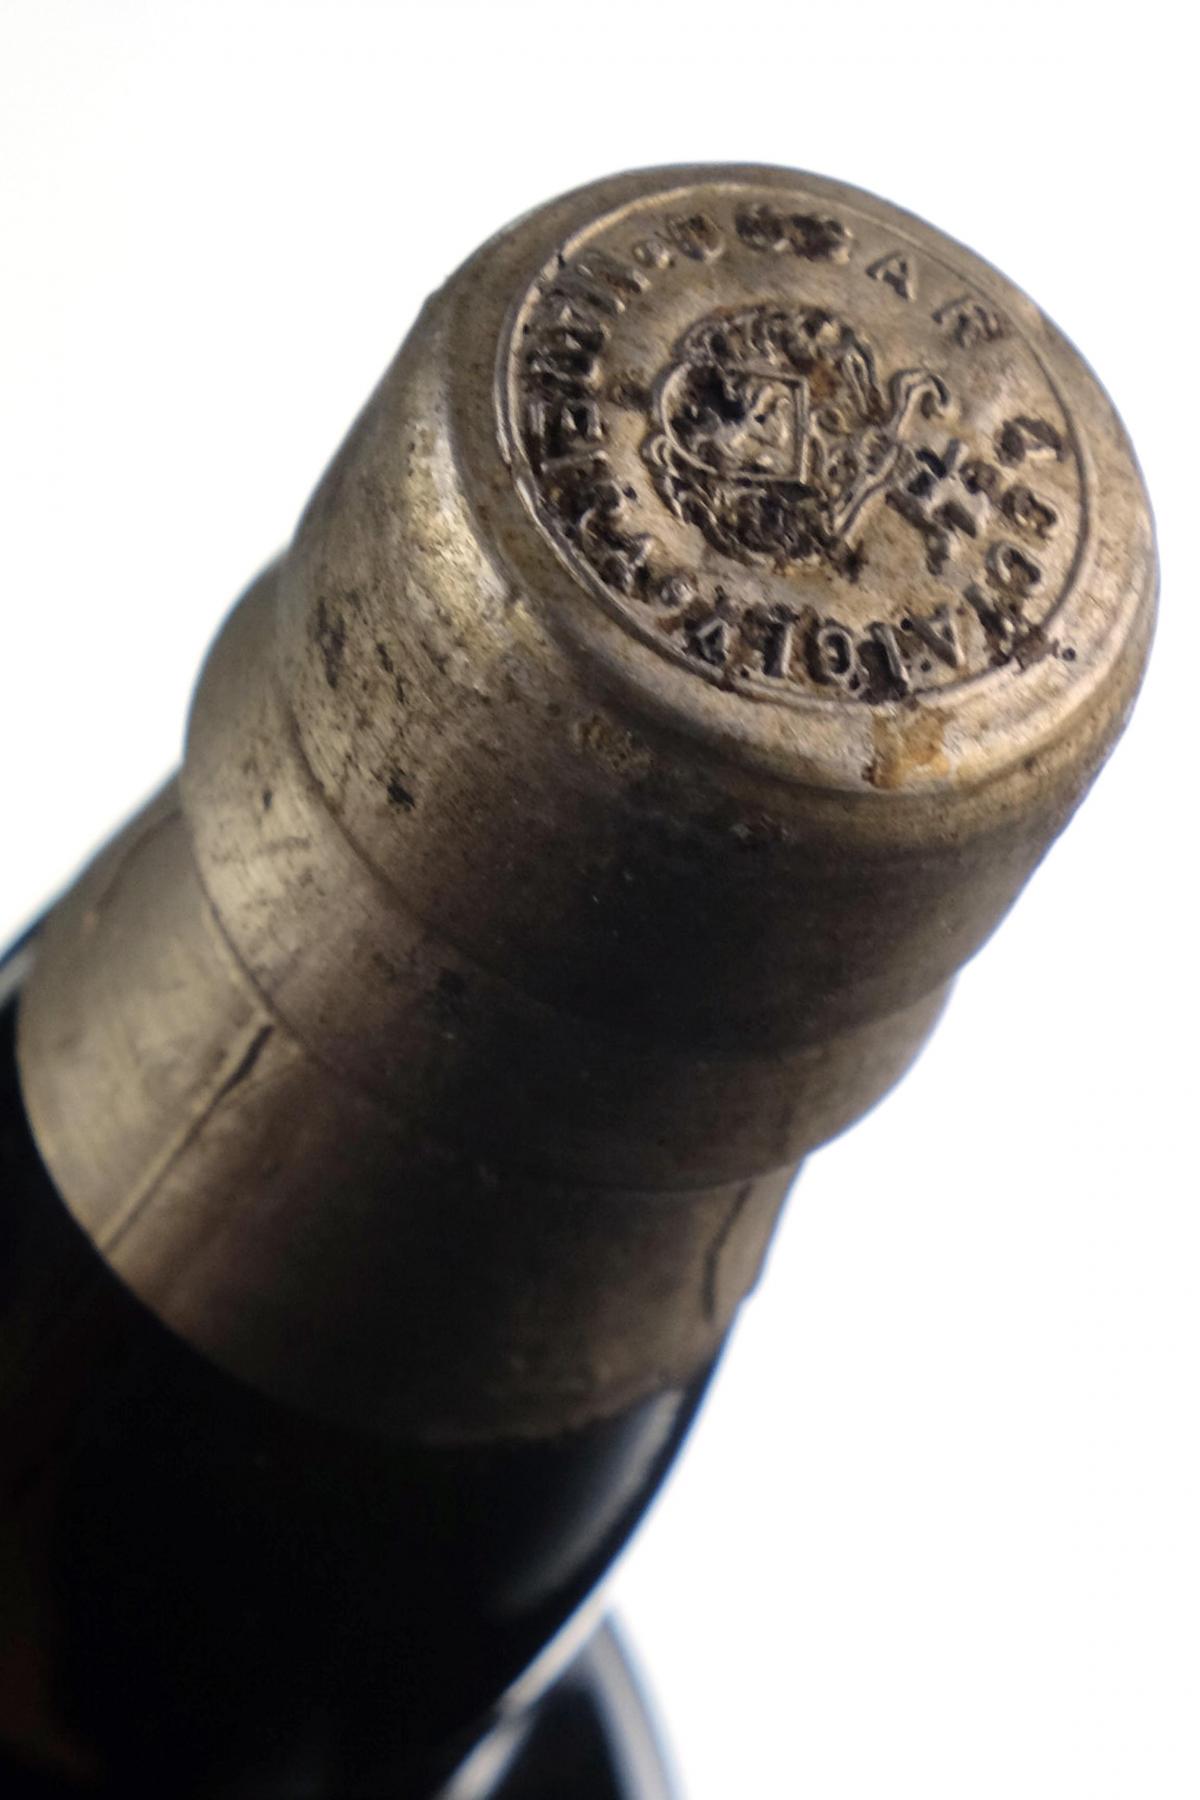 Oscars Terrantez Special Reserve 1802 - Fine Madeira Wine